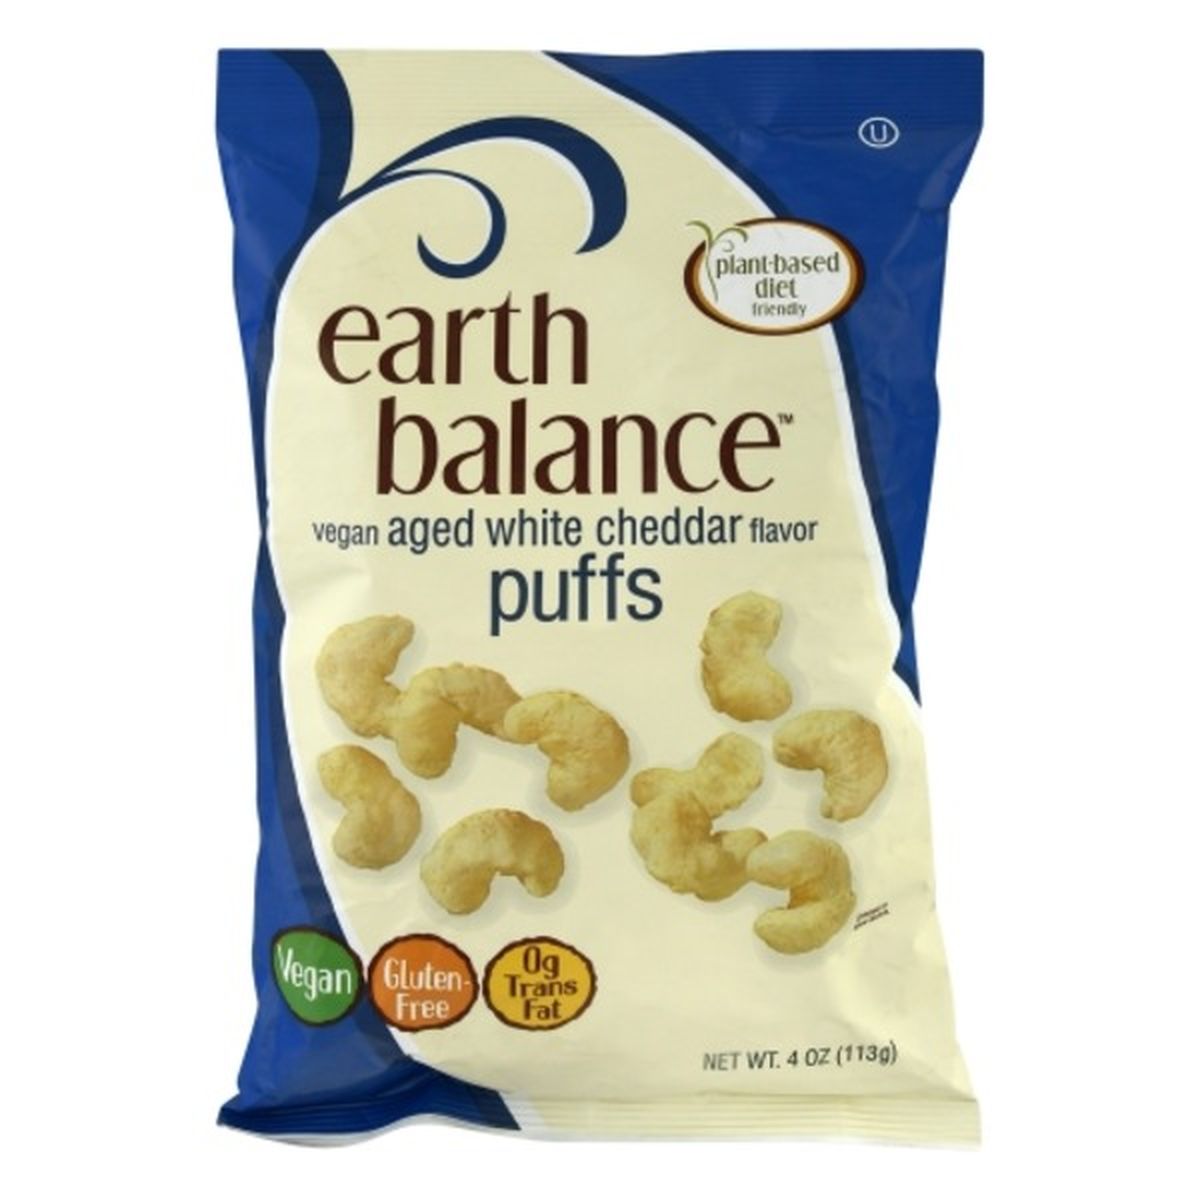 Calories in Earth Balance Puffs, Vegan, Aged White Cheddar Flavor